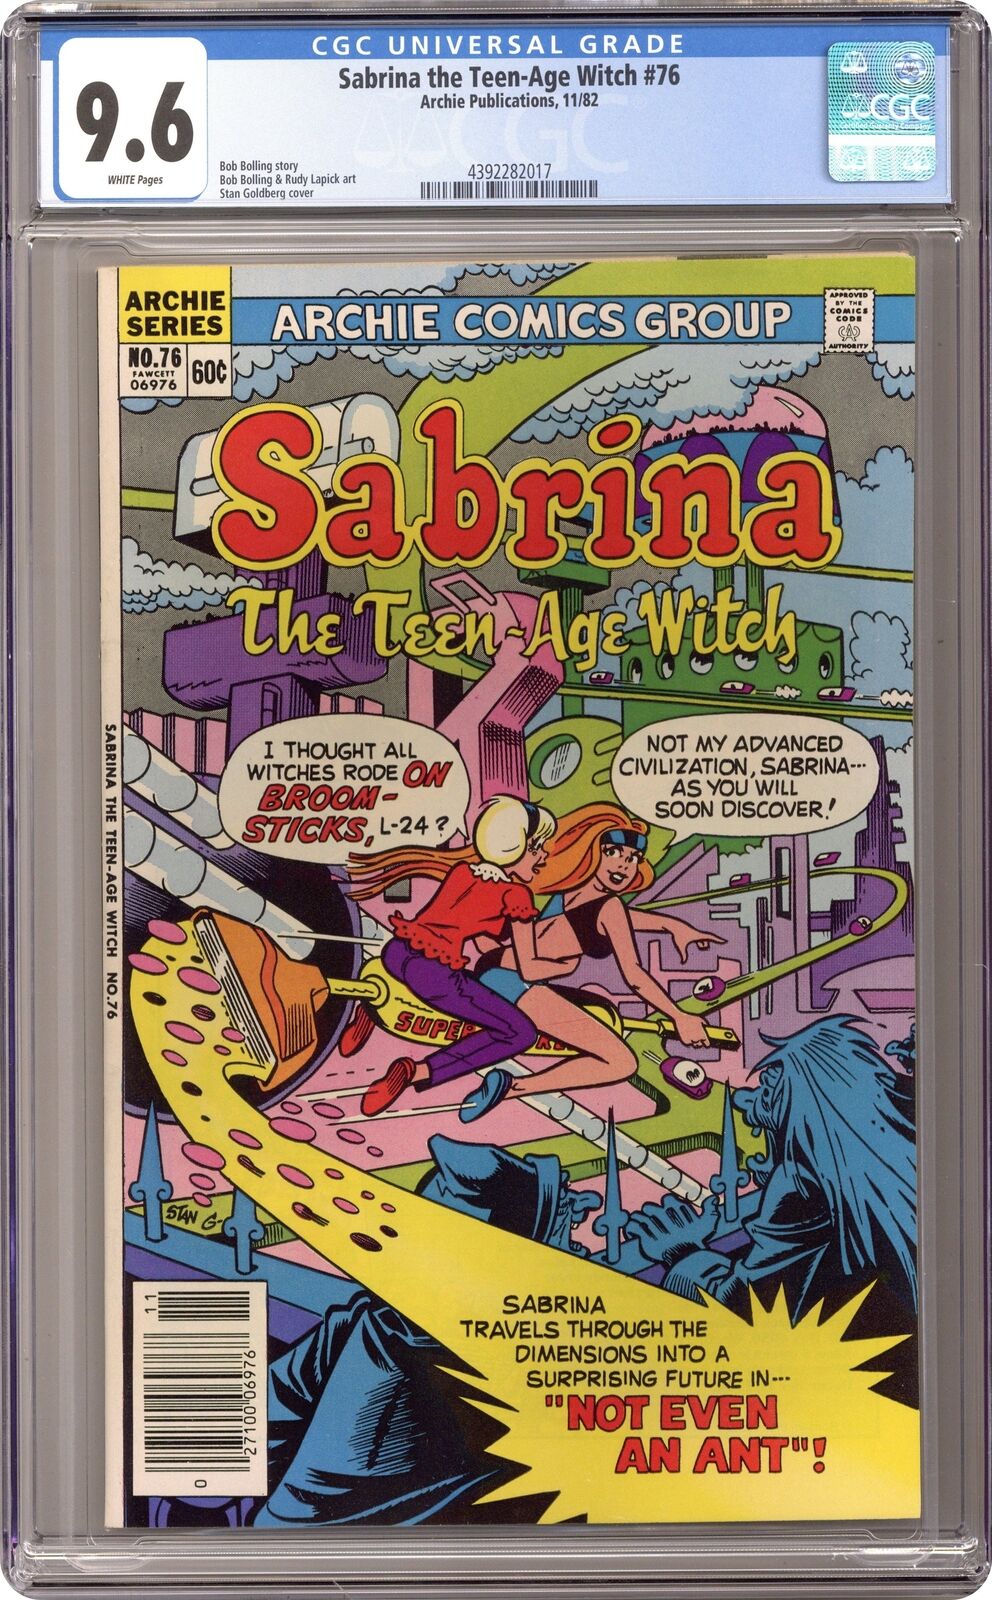 Sabrina the Teenage Witch #76 CGC 9.6 1982 4392282017